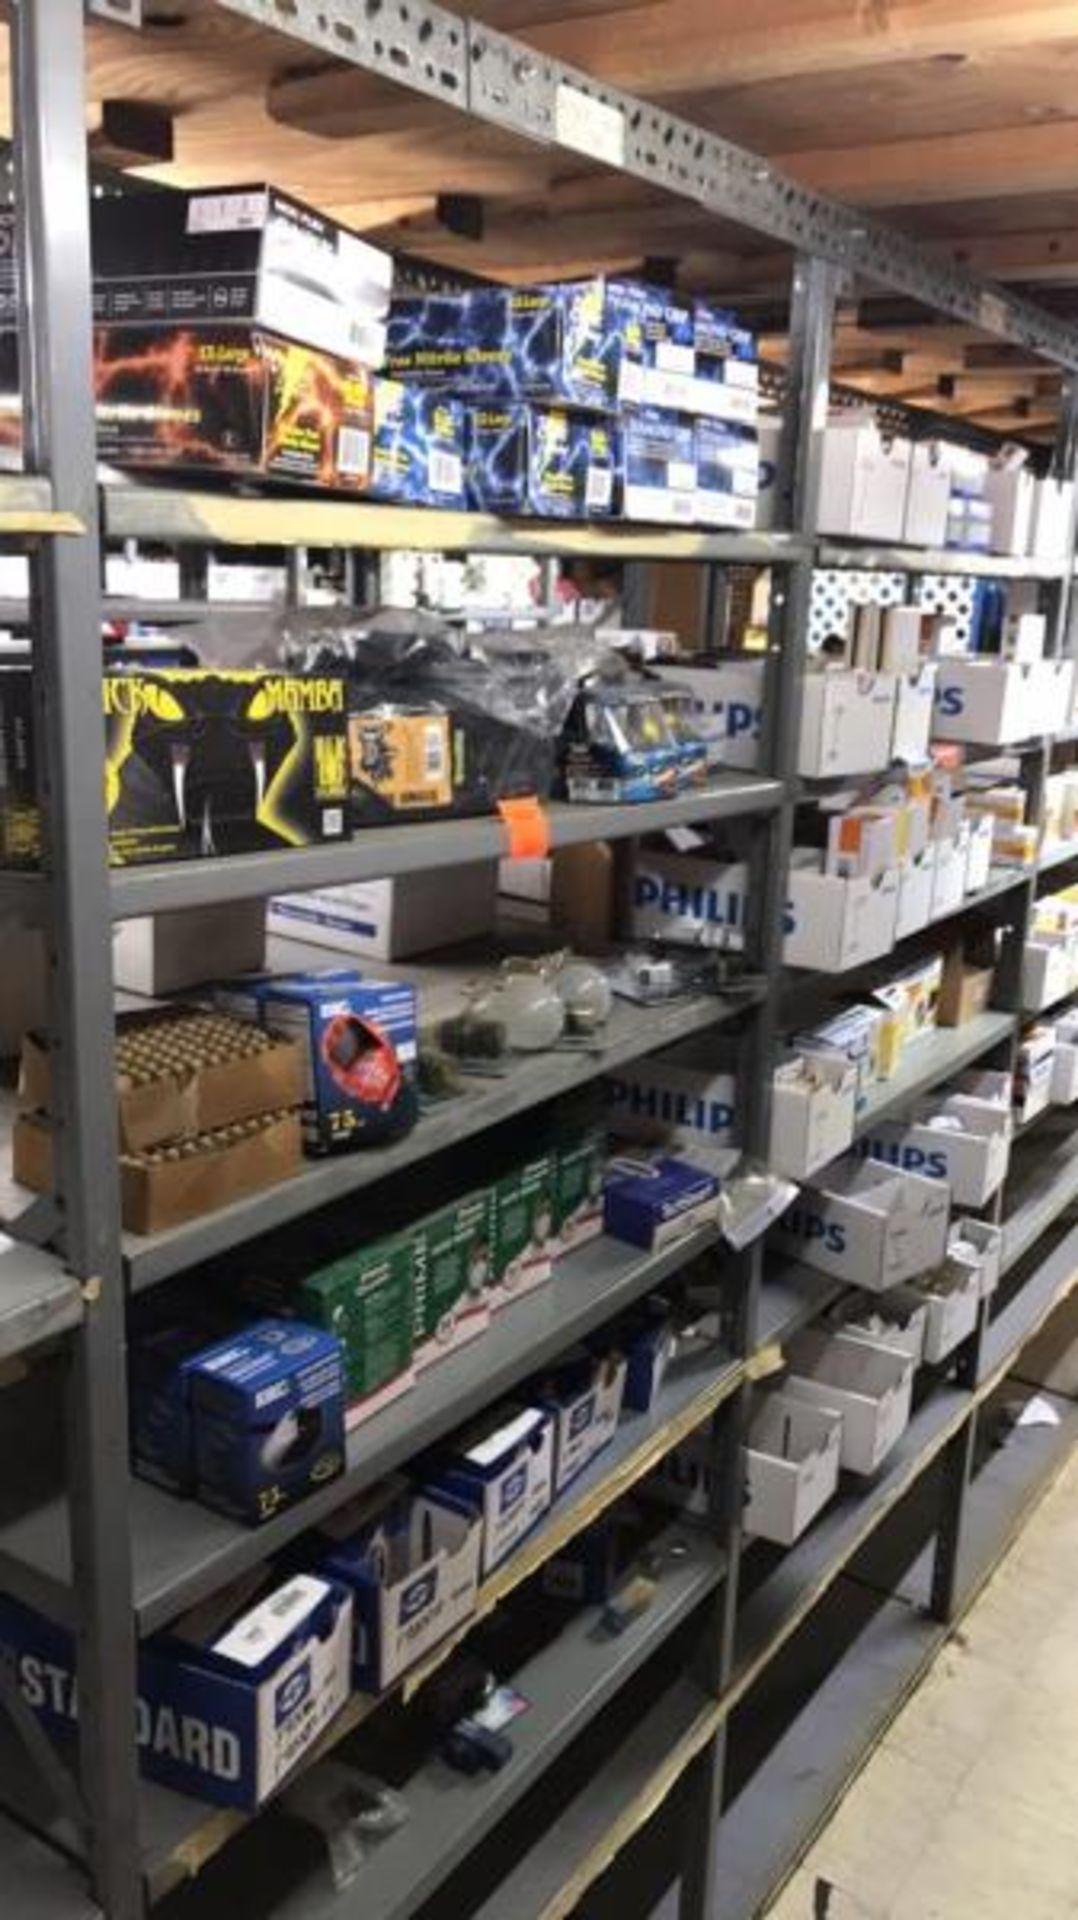 (6) Shelf of Gloves, Bulbs, Light RepairKits, (6) Shelf of Gloves, Bulbs, Light RepairKits, Dust